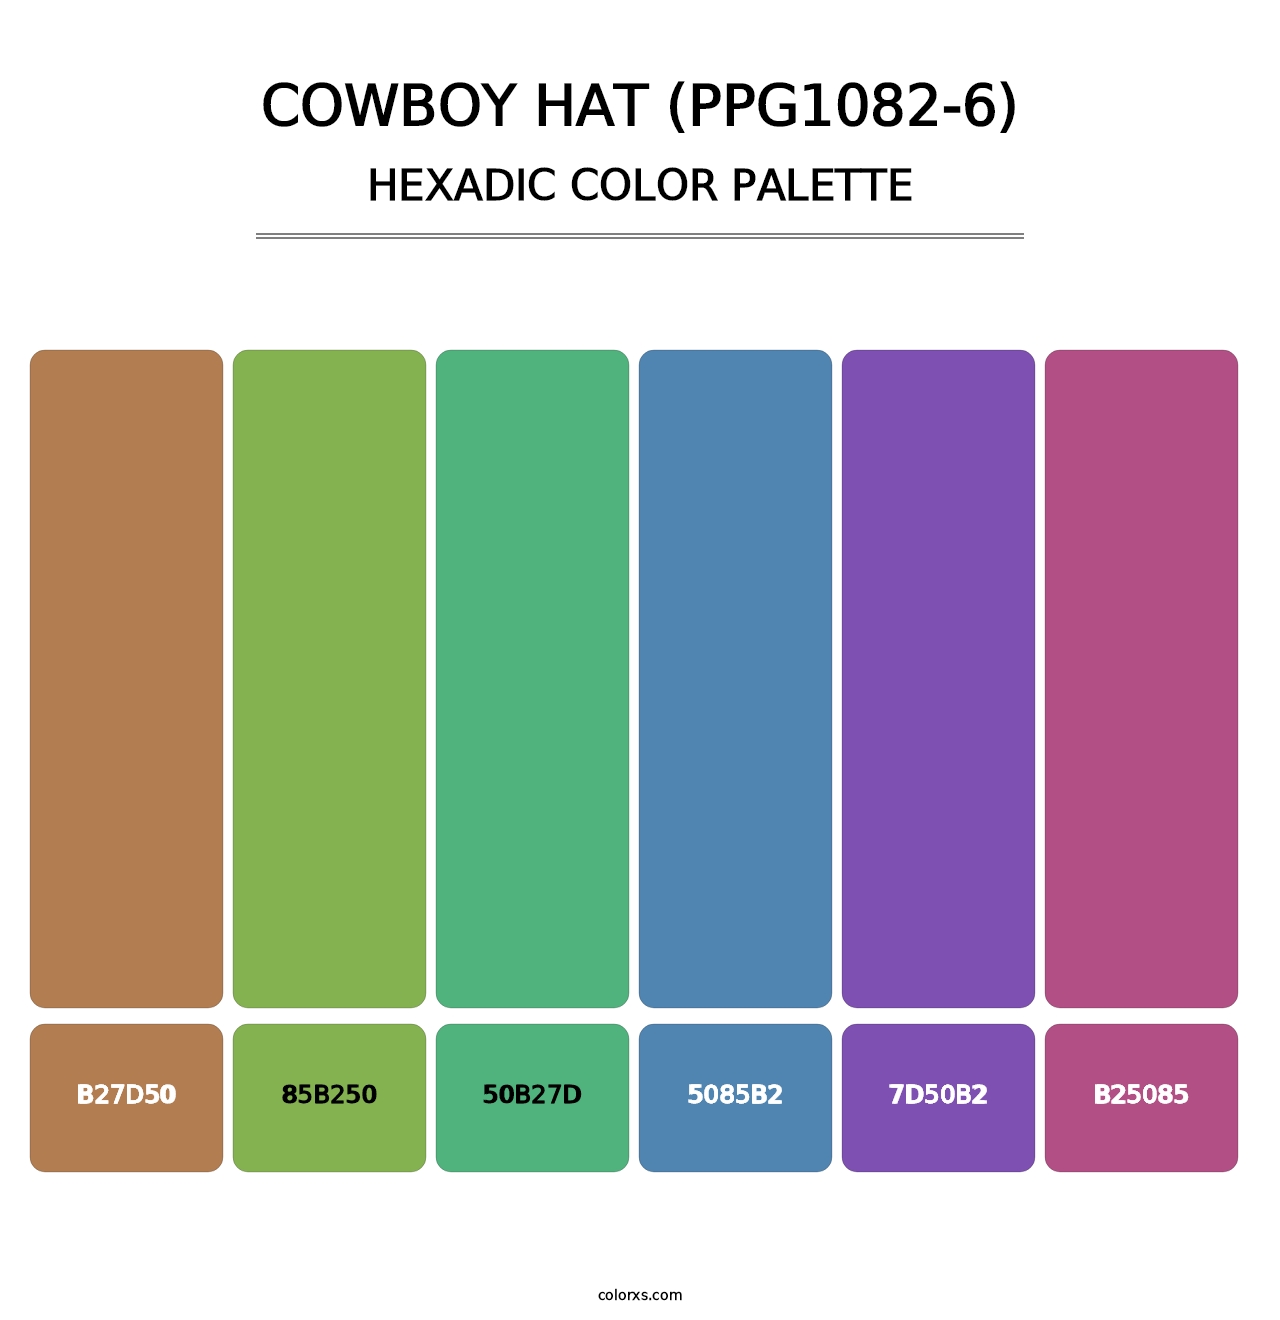 Cowboy Hat (PPG1082-6) - Hexadic Color Palette